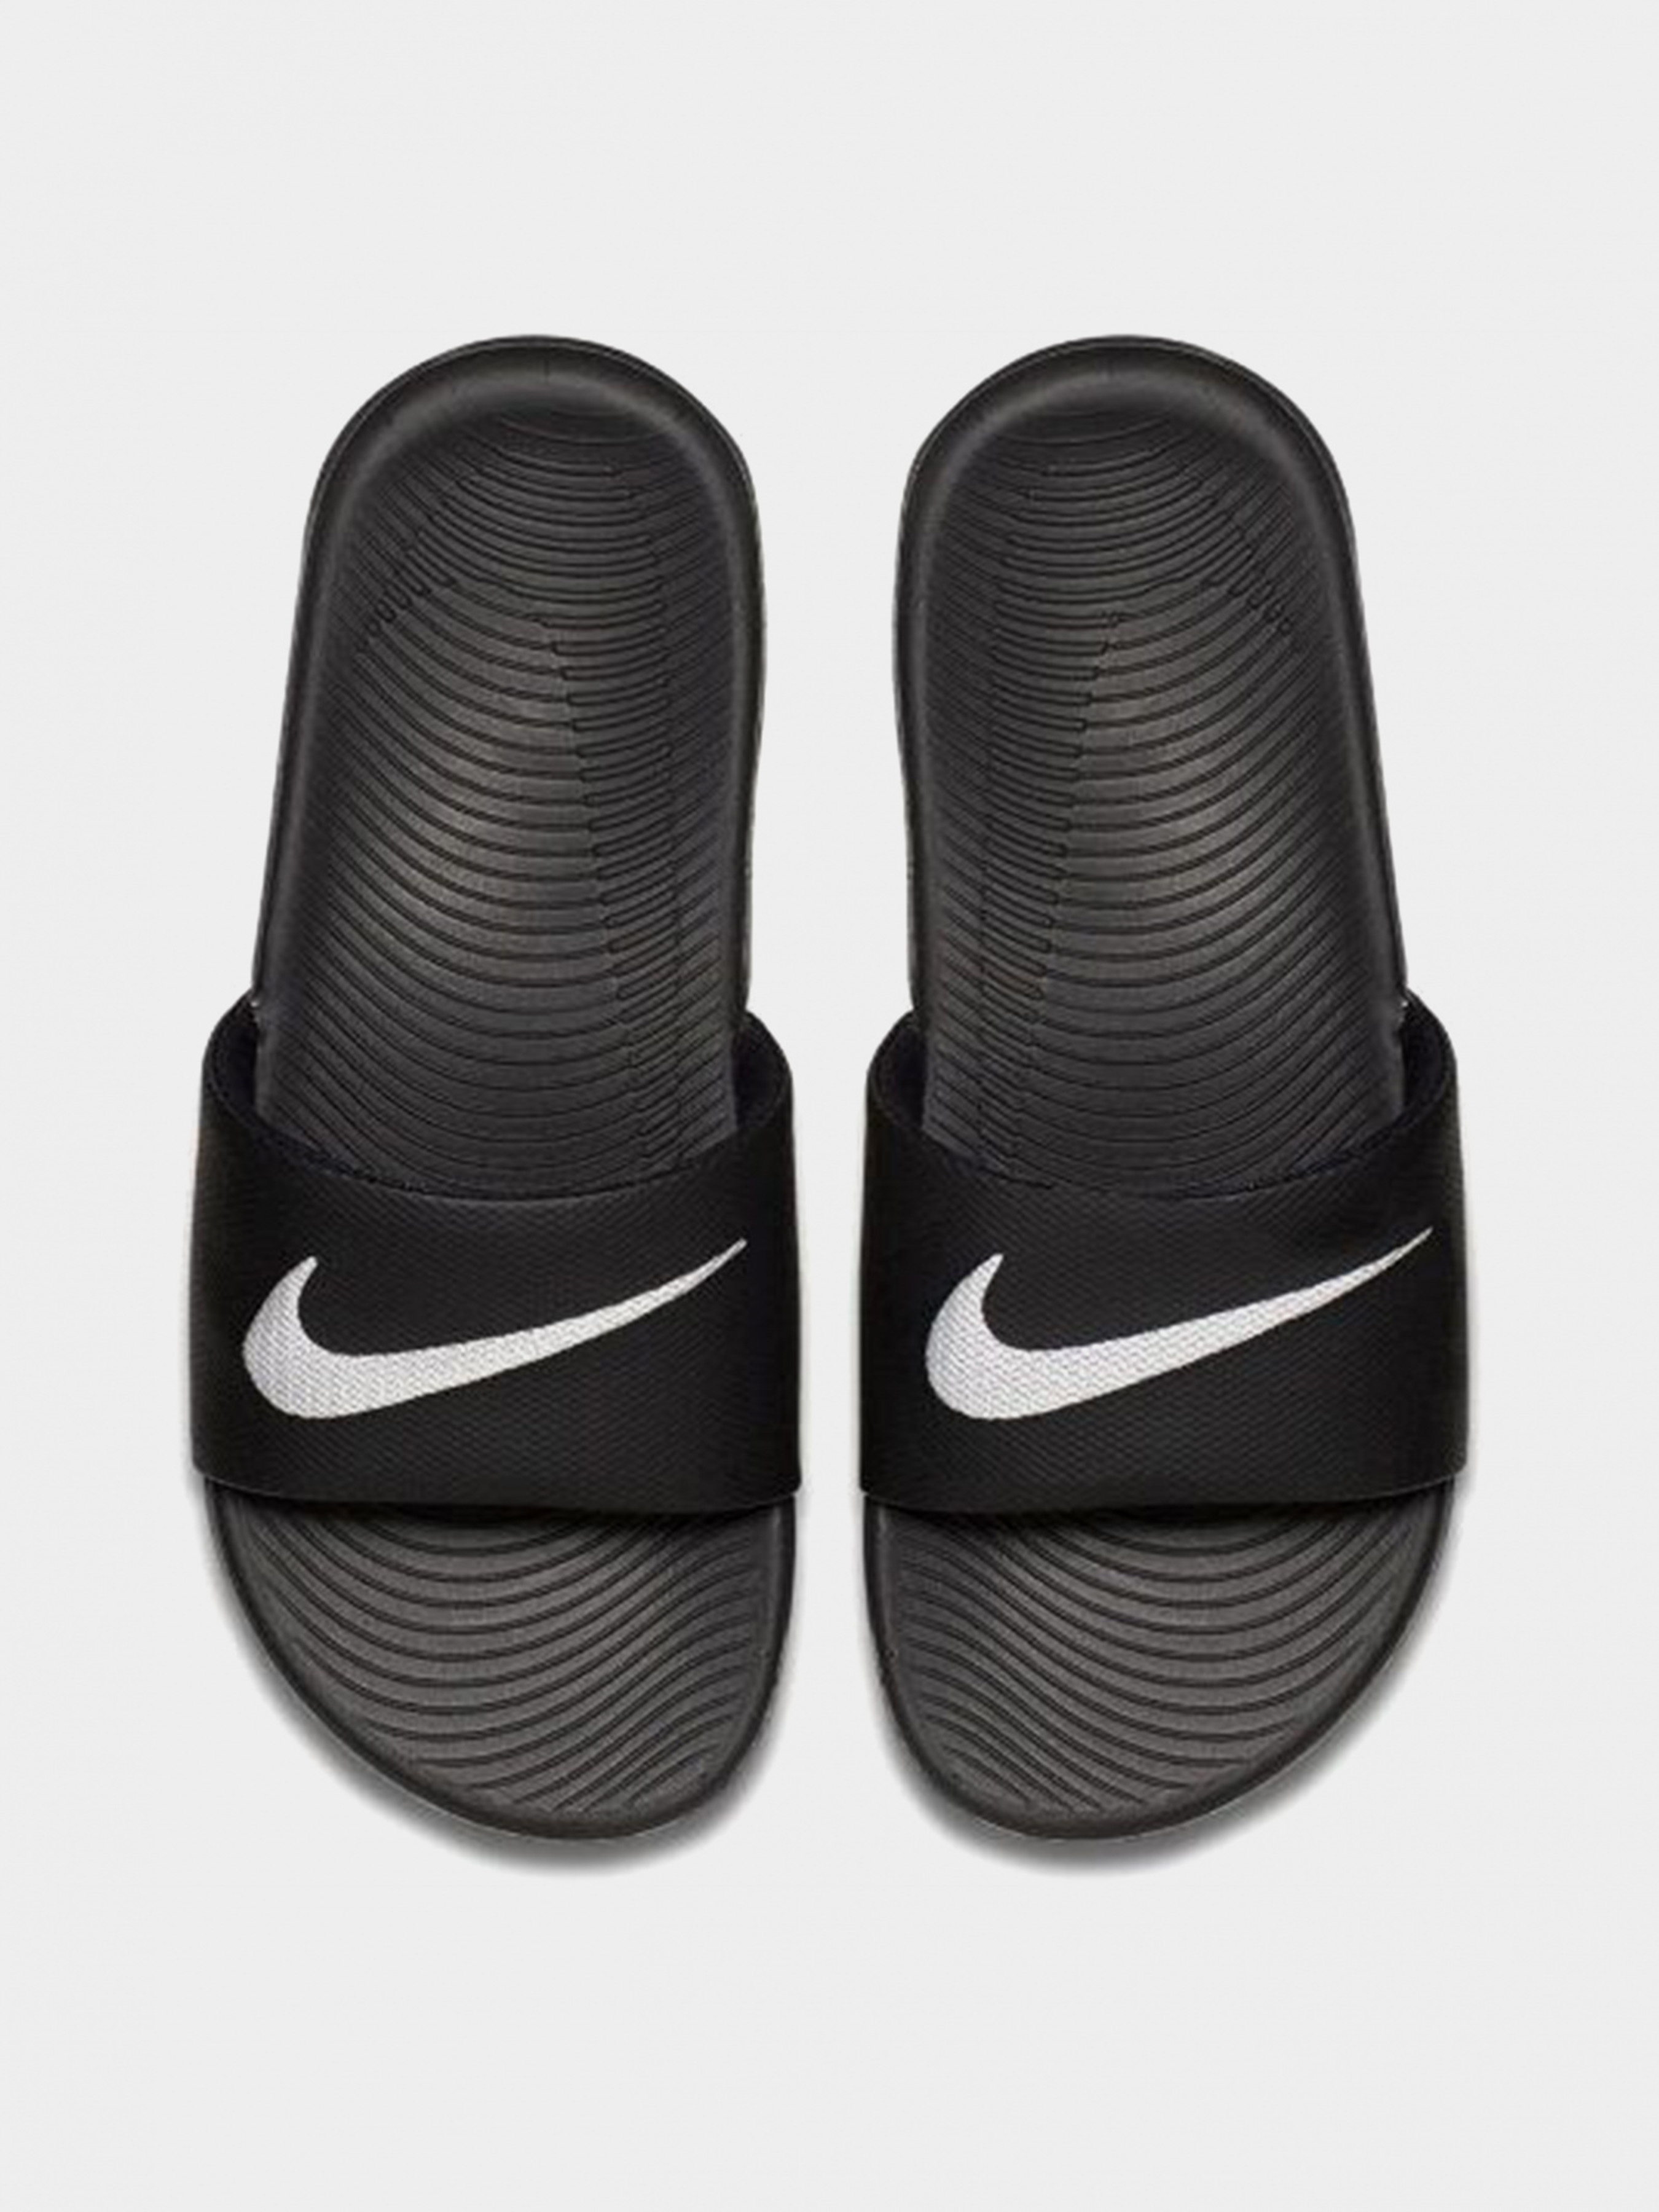 Резиновые найк. Шлепанцы Nike Kawa Slide. Сланцы Nike Kawa Shower Jr 819352-001. Сланцы Nike Solarsoft Slide. Шлепки Nike ci8880-003.